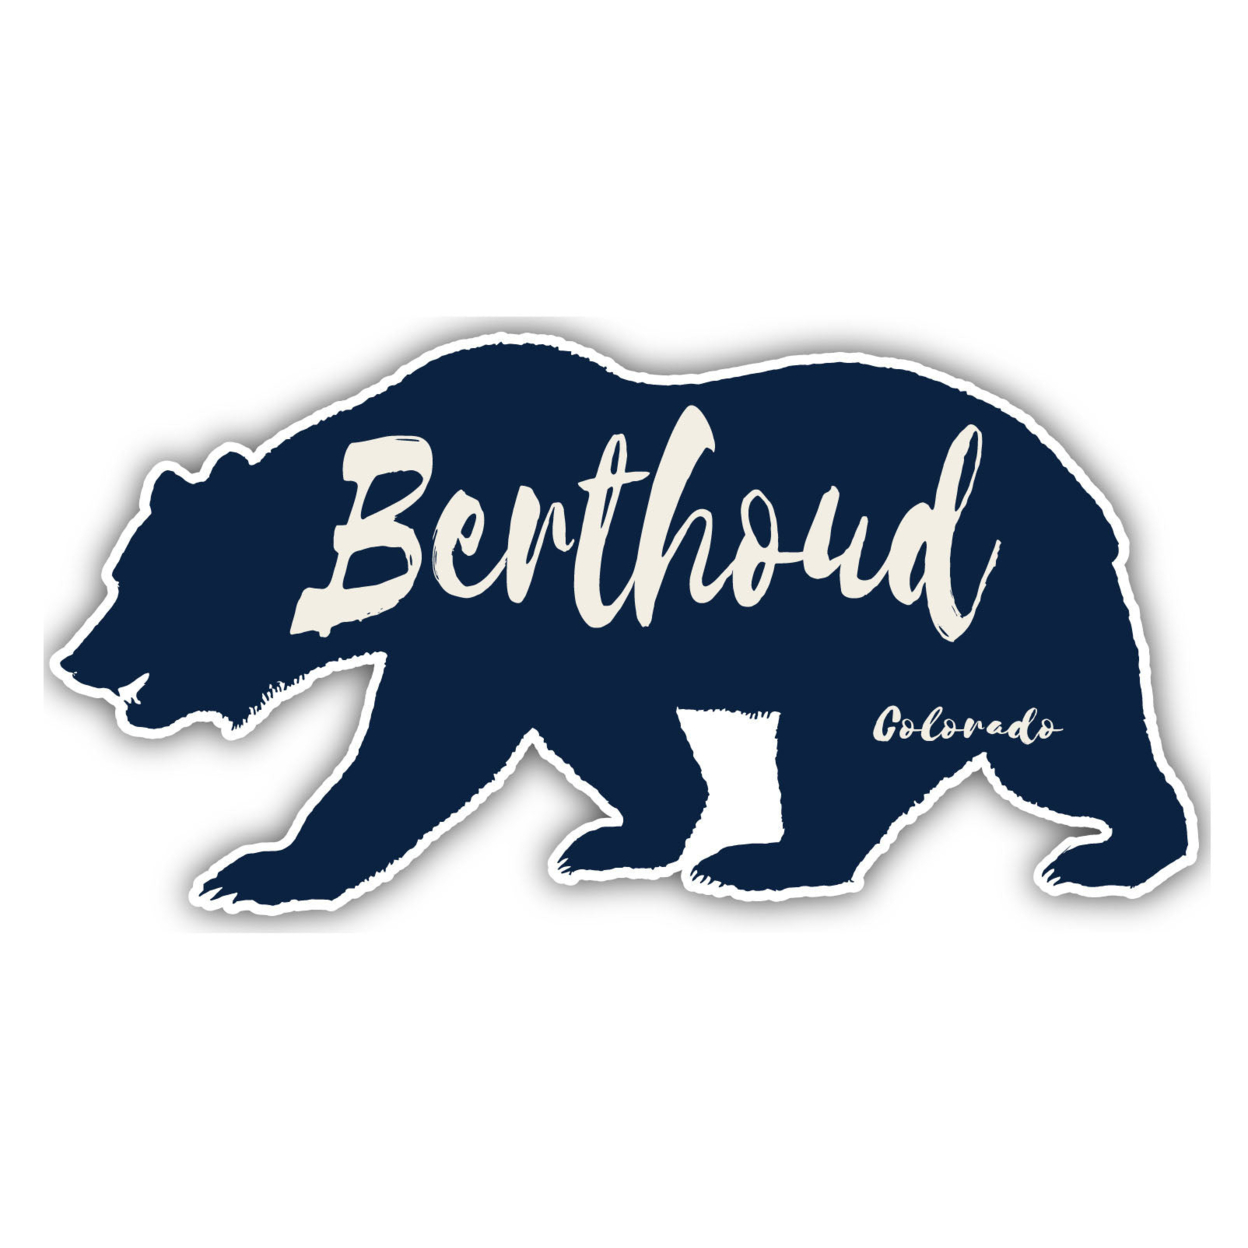 Berthoud Colorado Souvenir Decorative Stickers (Choose Theme And Size) - 4-Pack, 12-Inch, Bear